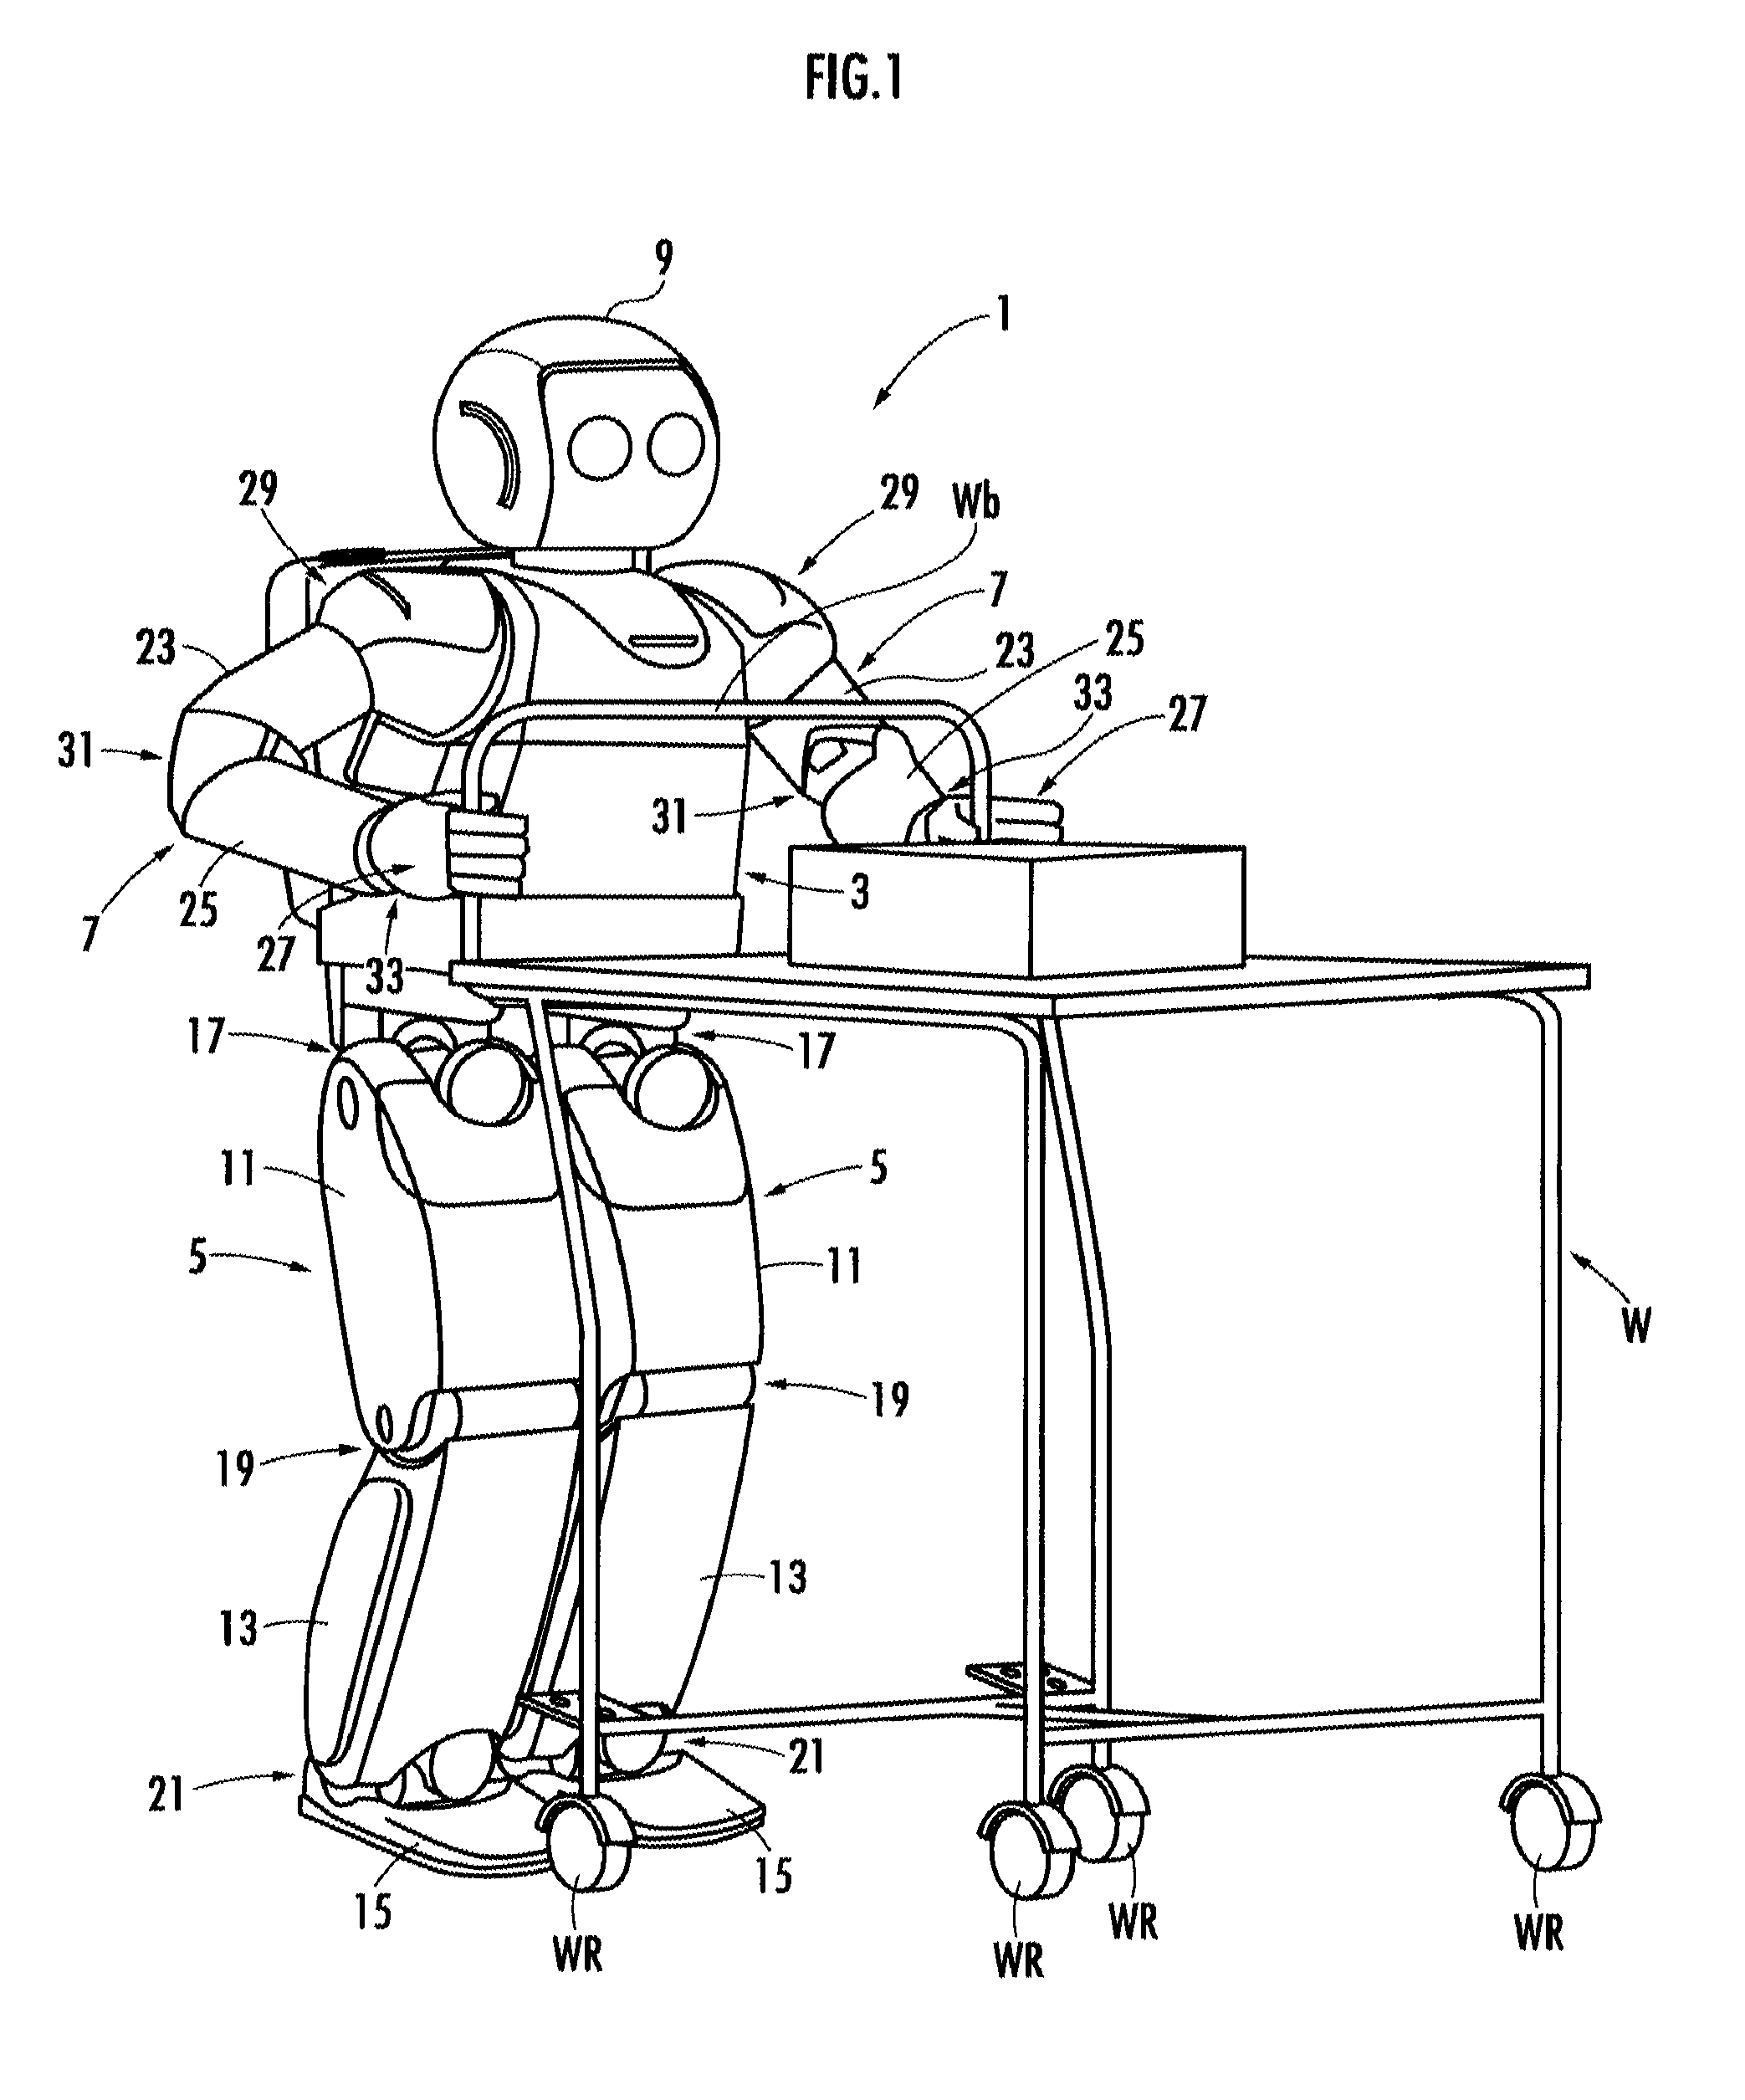 Controller of mobile robot